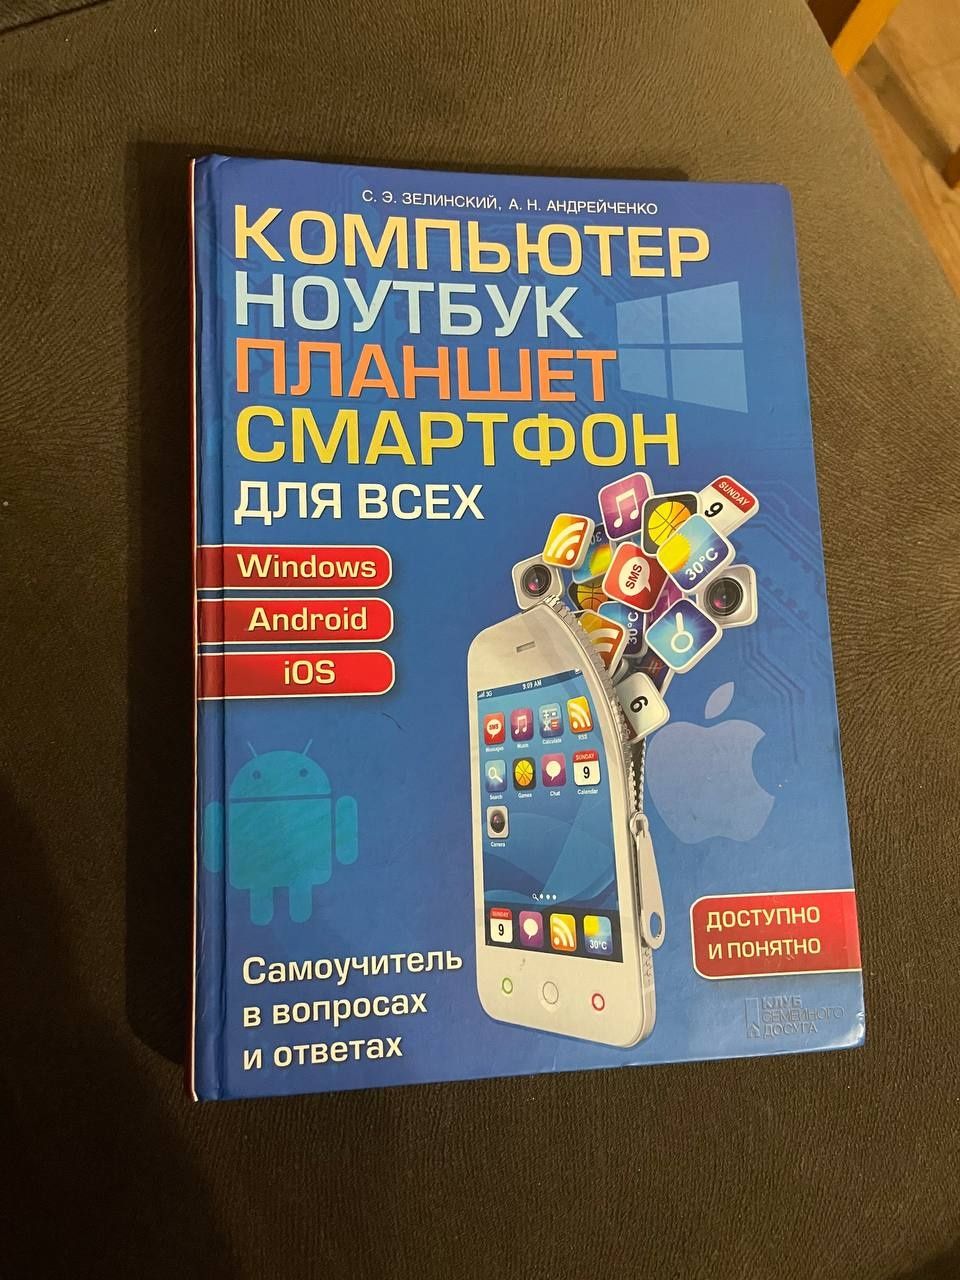 Книга "Компьютер, ноутбук, планшет, смартфон